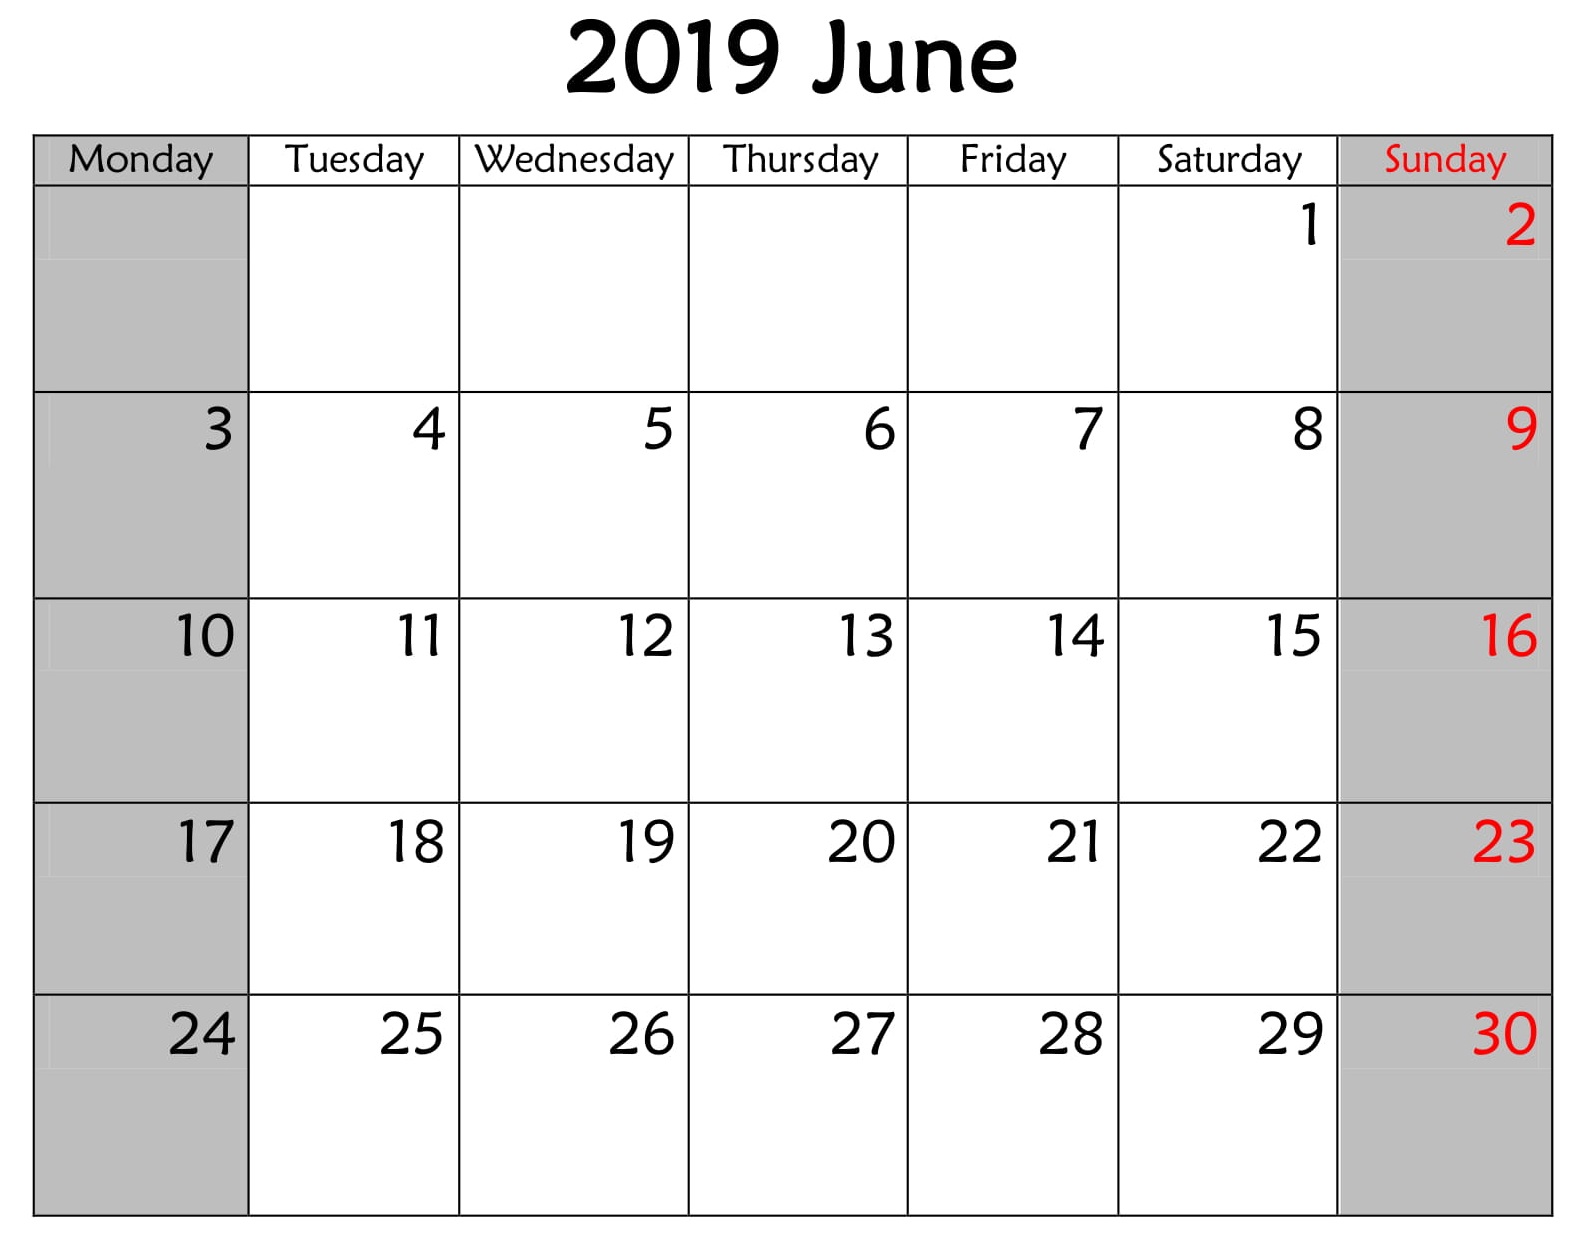 June Calendar 2019 Blank Template